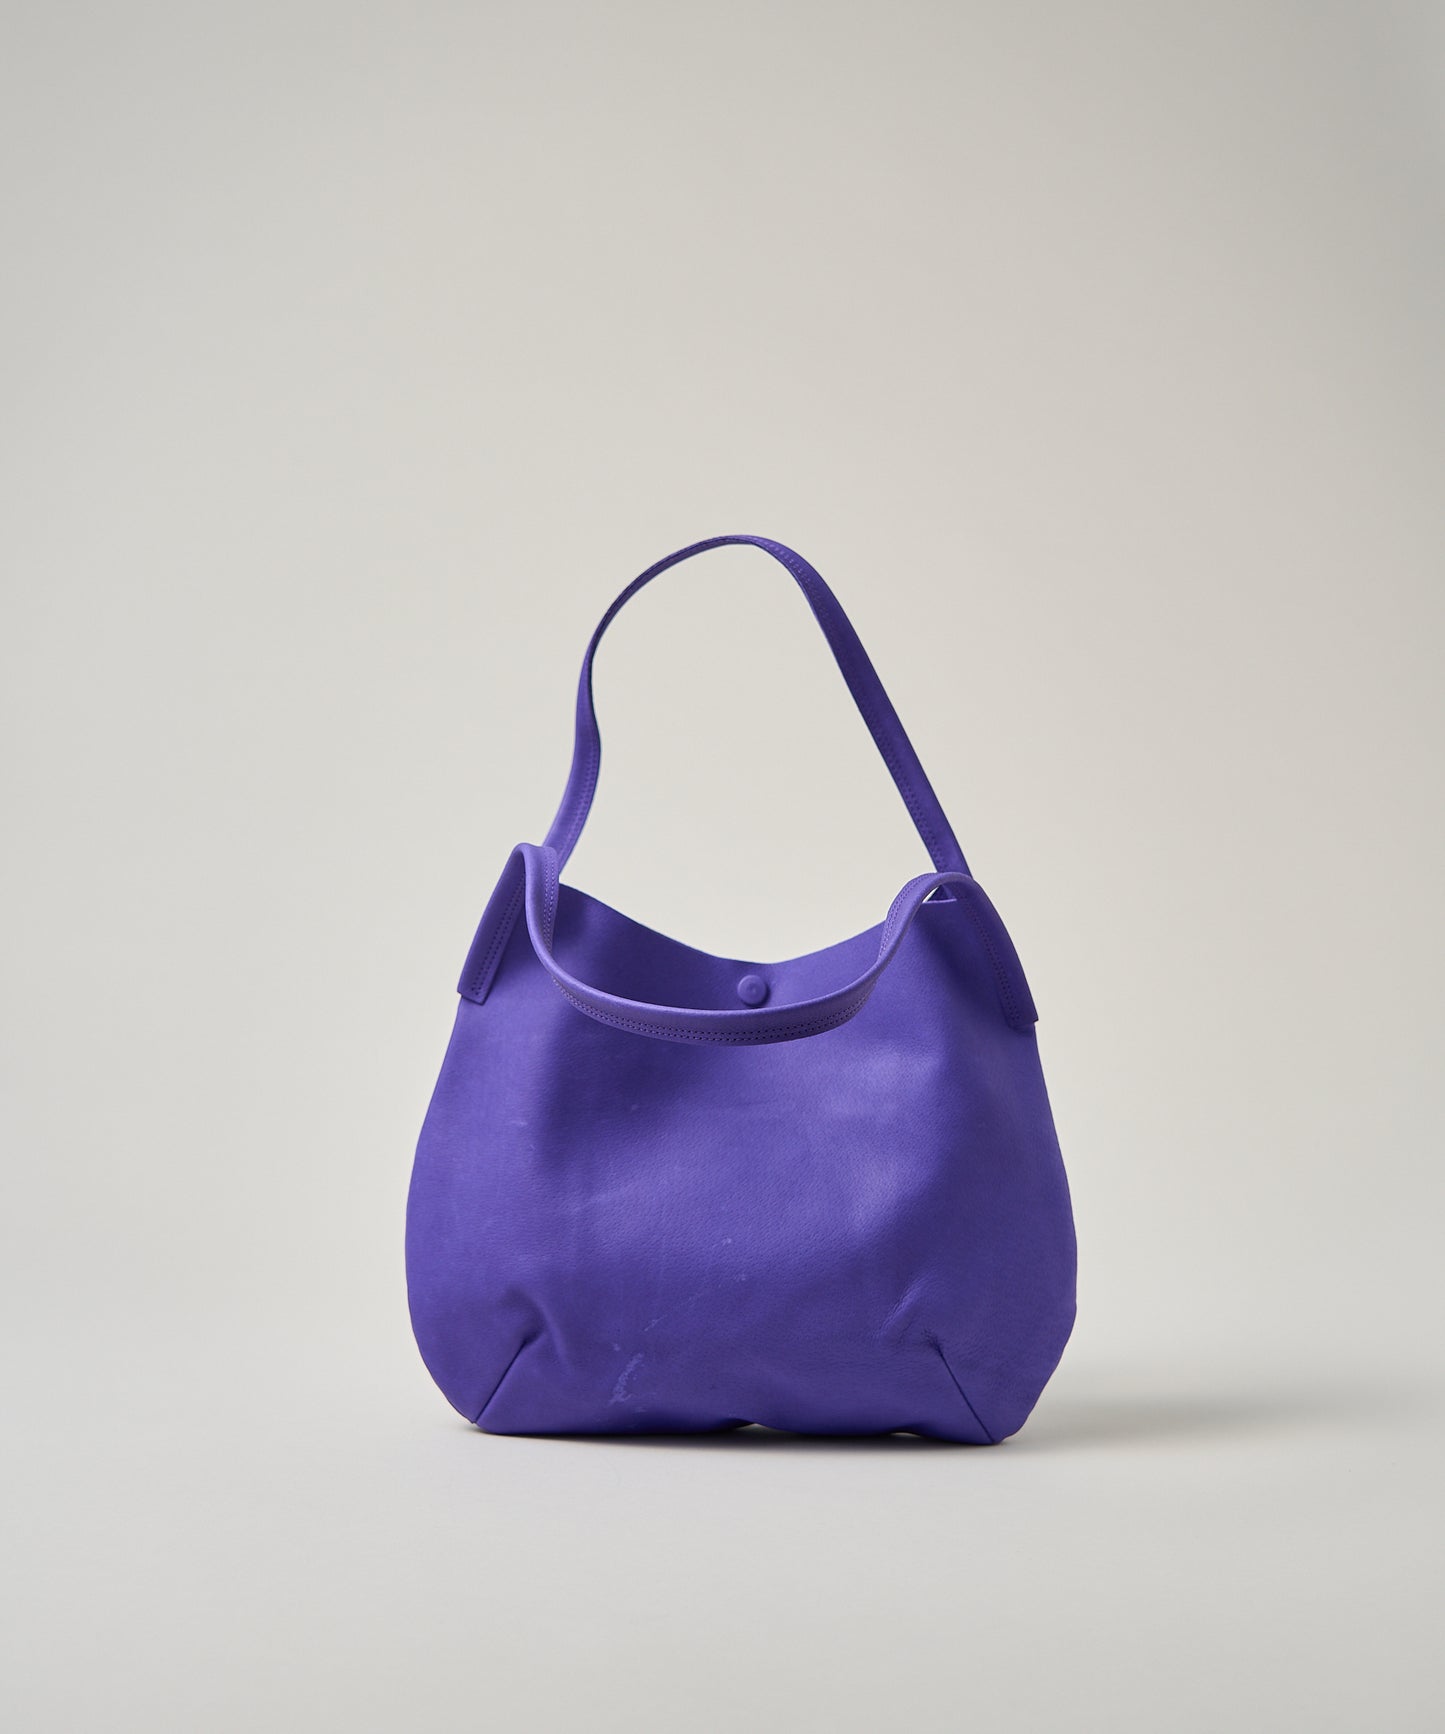 Circle tote bag (bright purple) / pigskin "HALLIE" limited color